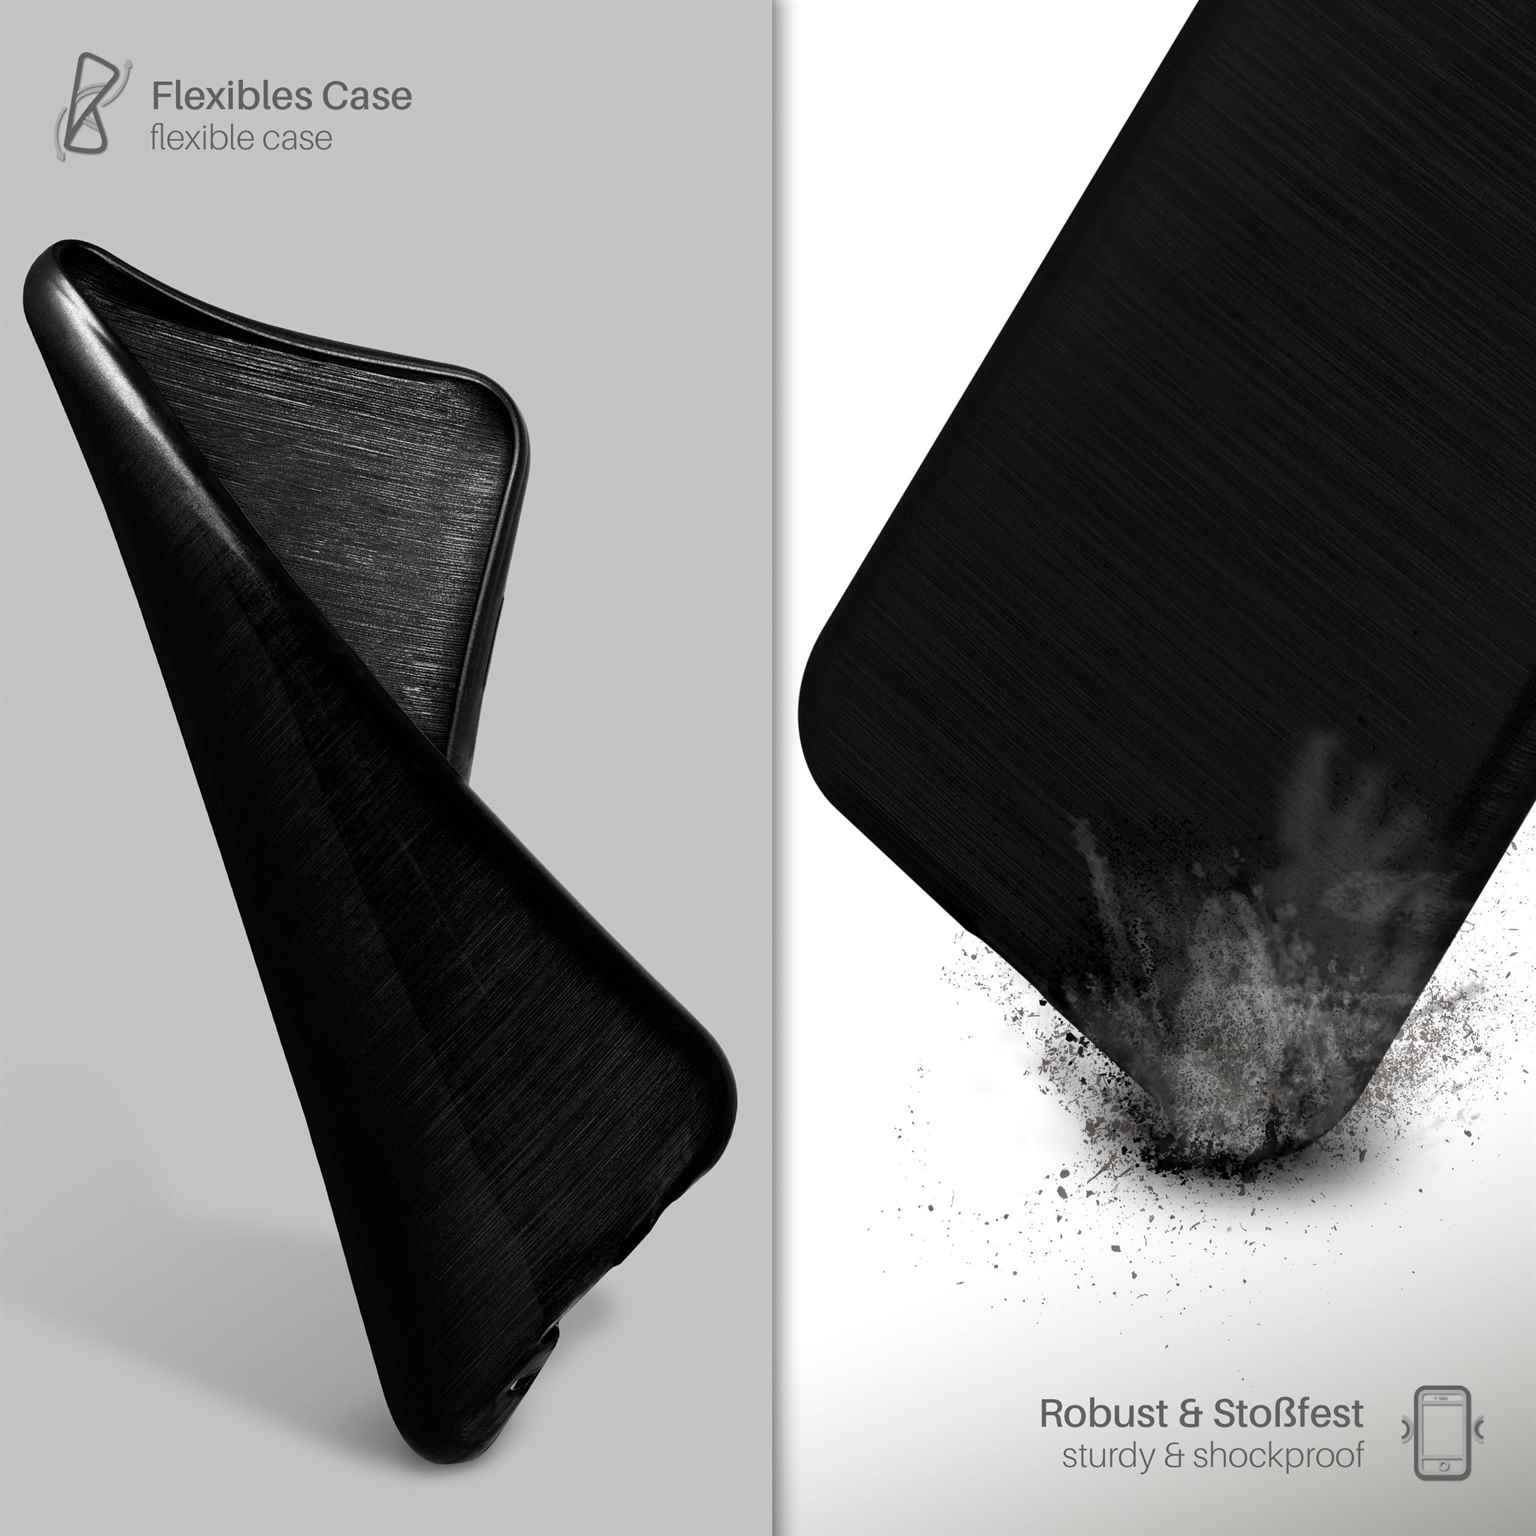 MOEX Brushed Case, Slate-Black Backcover, iPhone XS, Apple